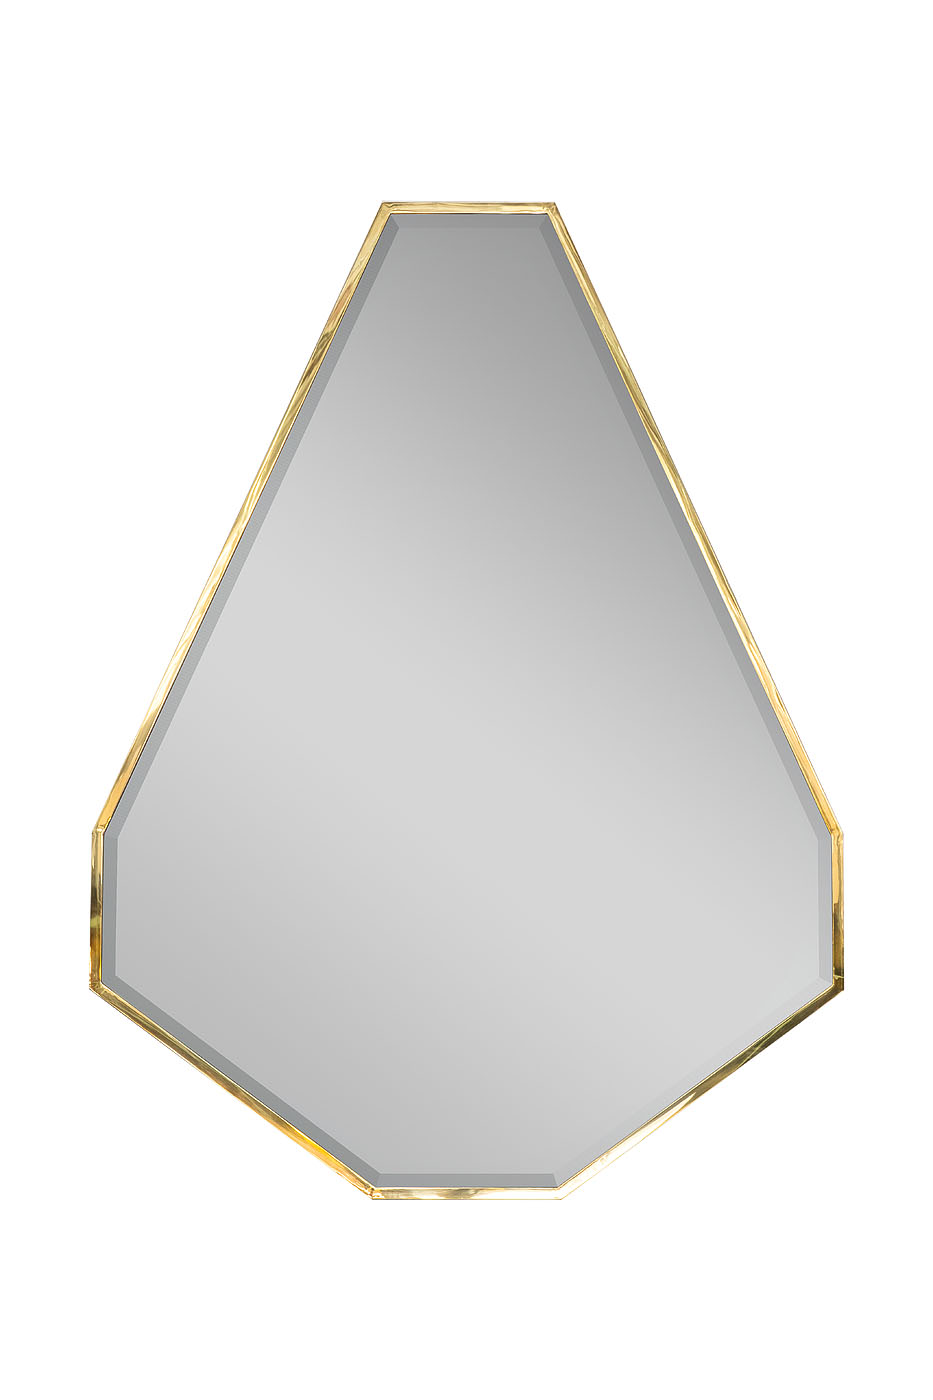 KFG088 Зеркало в металлической раме,  цвет золото